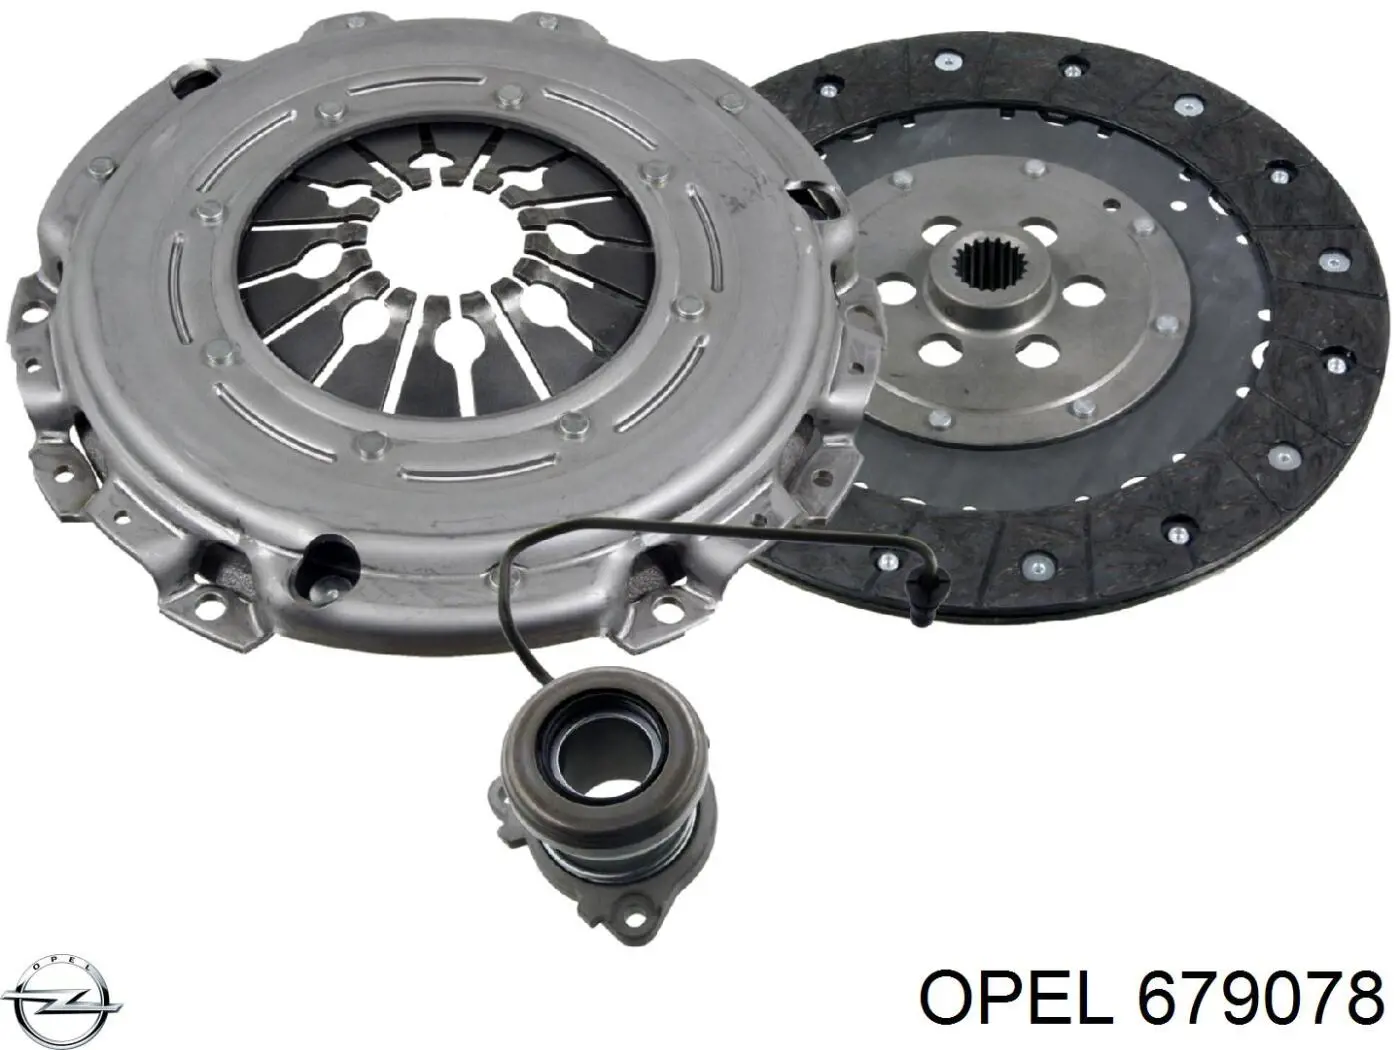 679078 Opel desembrague central, embrague